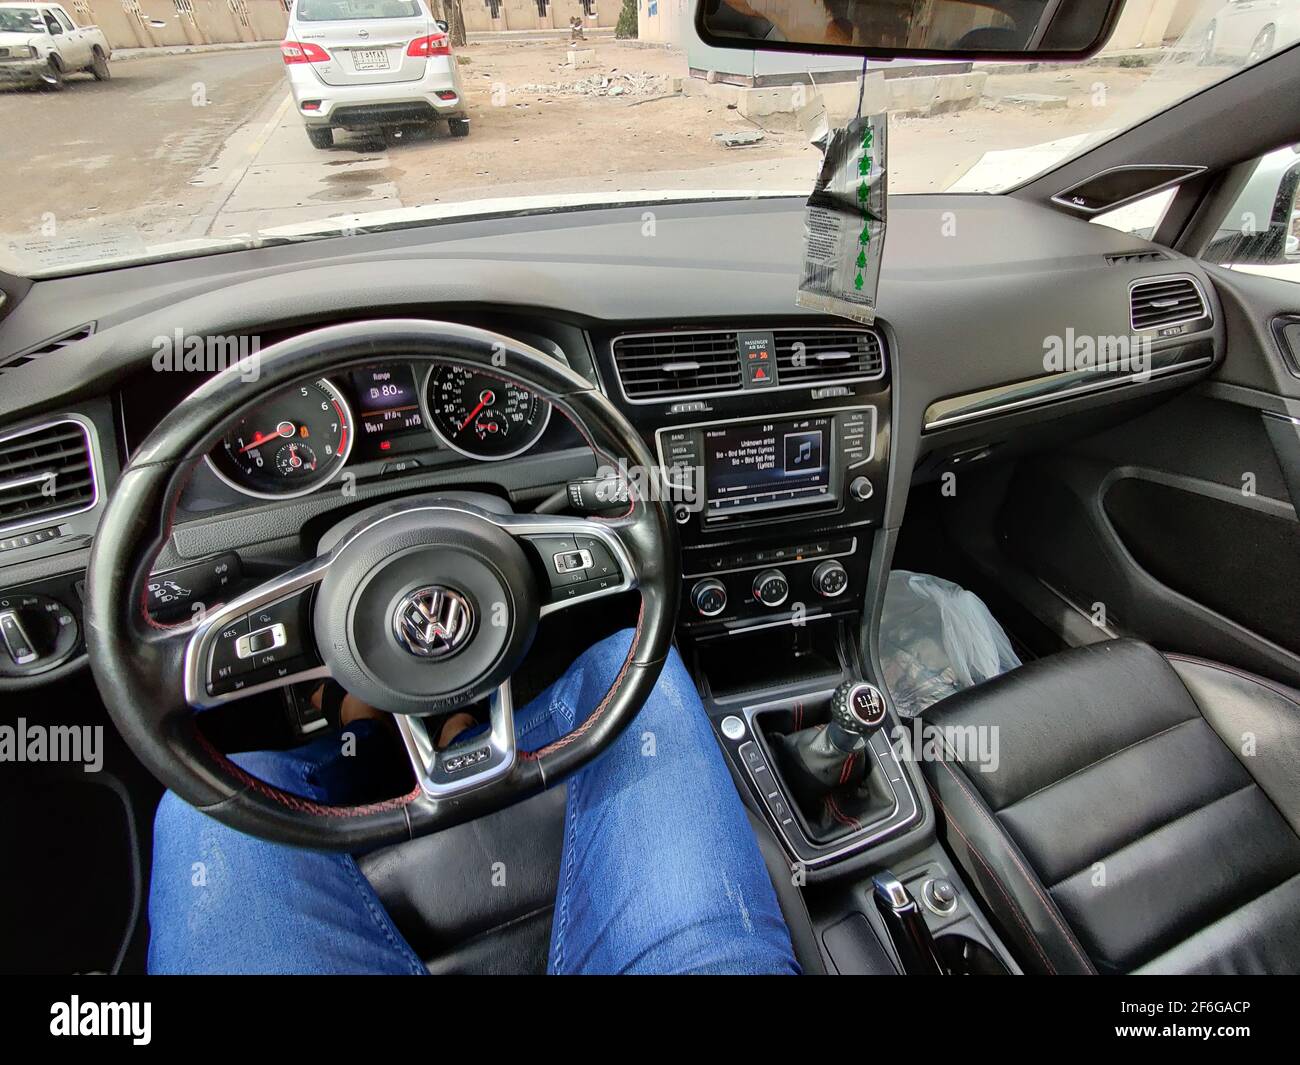 basra, Iraq - january 27, 2019:  photos behaind the car steering wheel Stock Photo